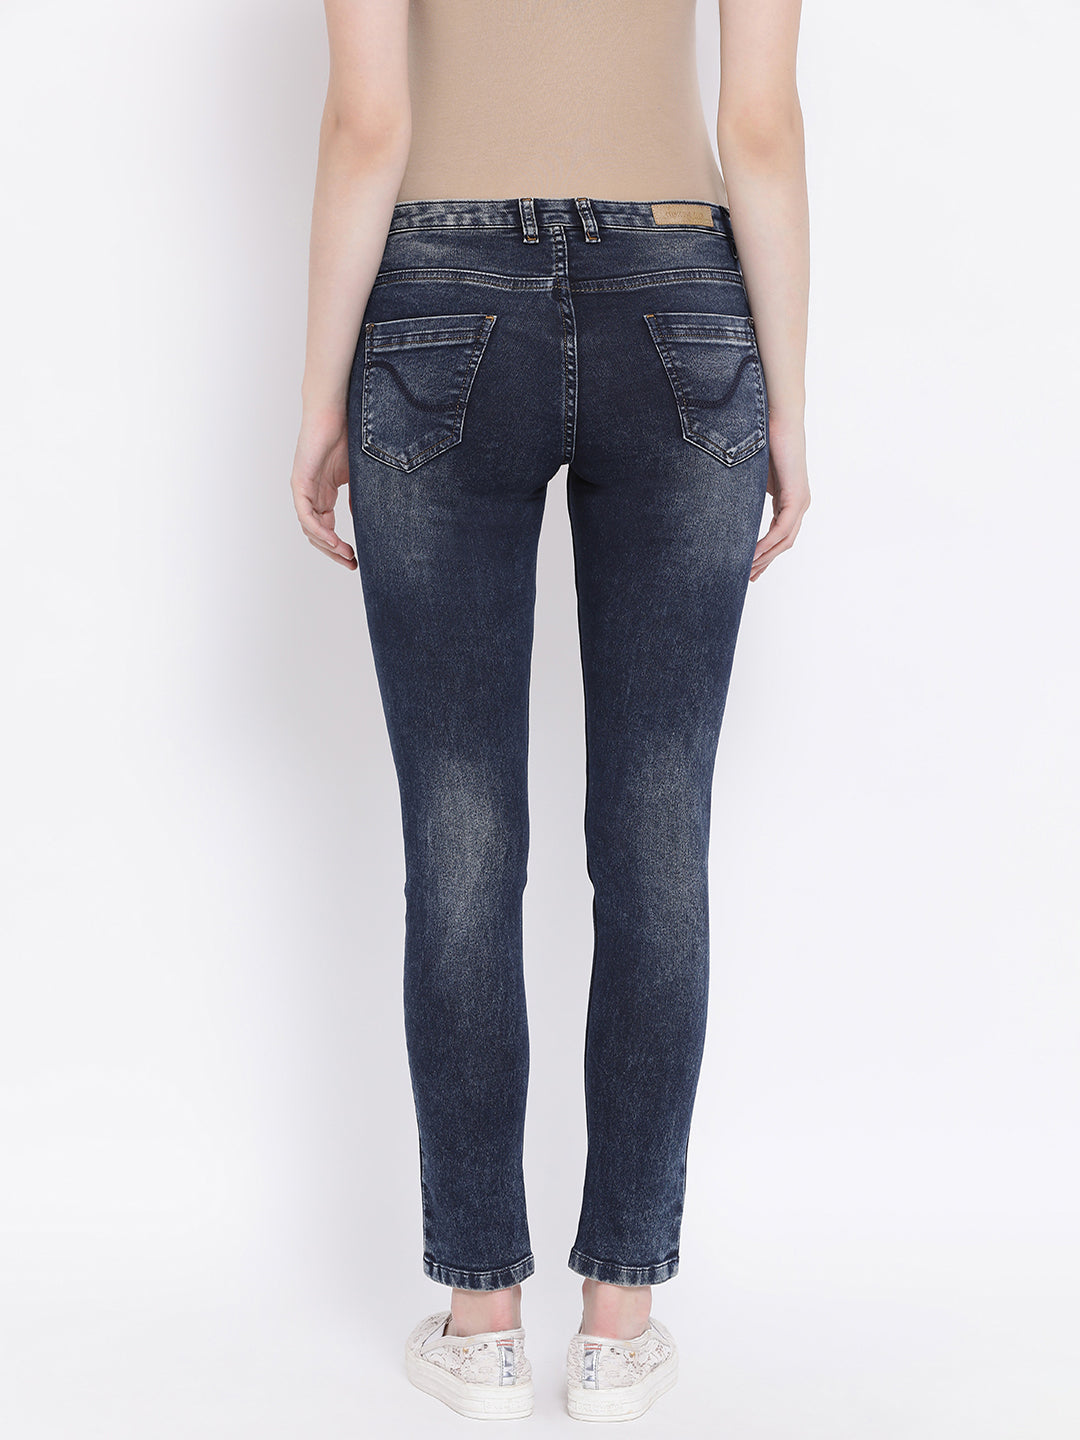 Black Super Skinny Fit Jeans - Women Jeans